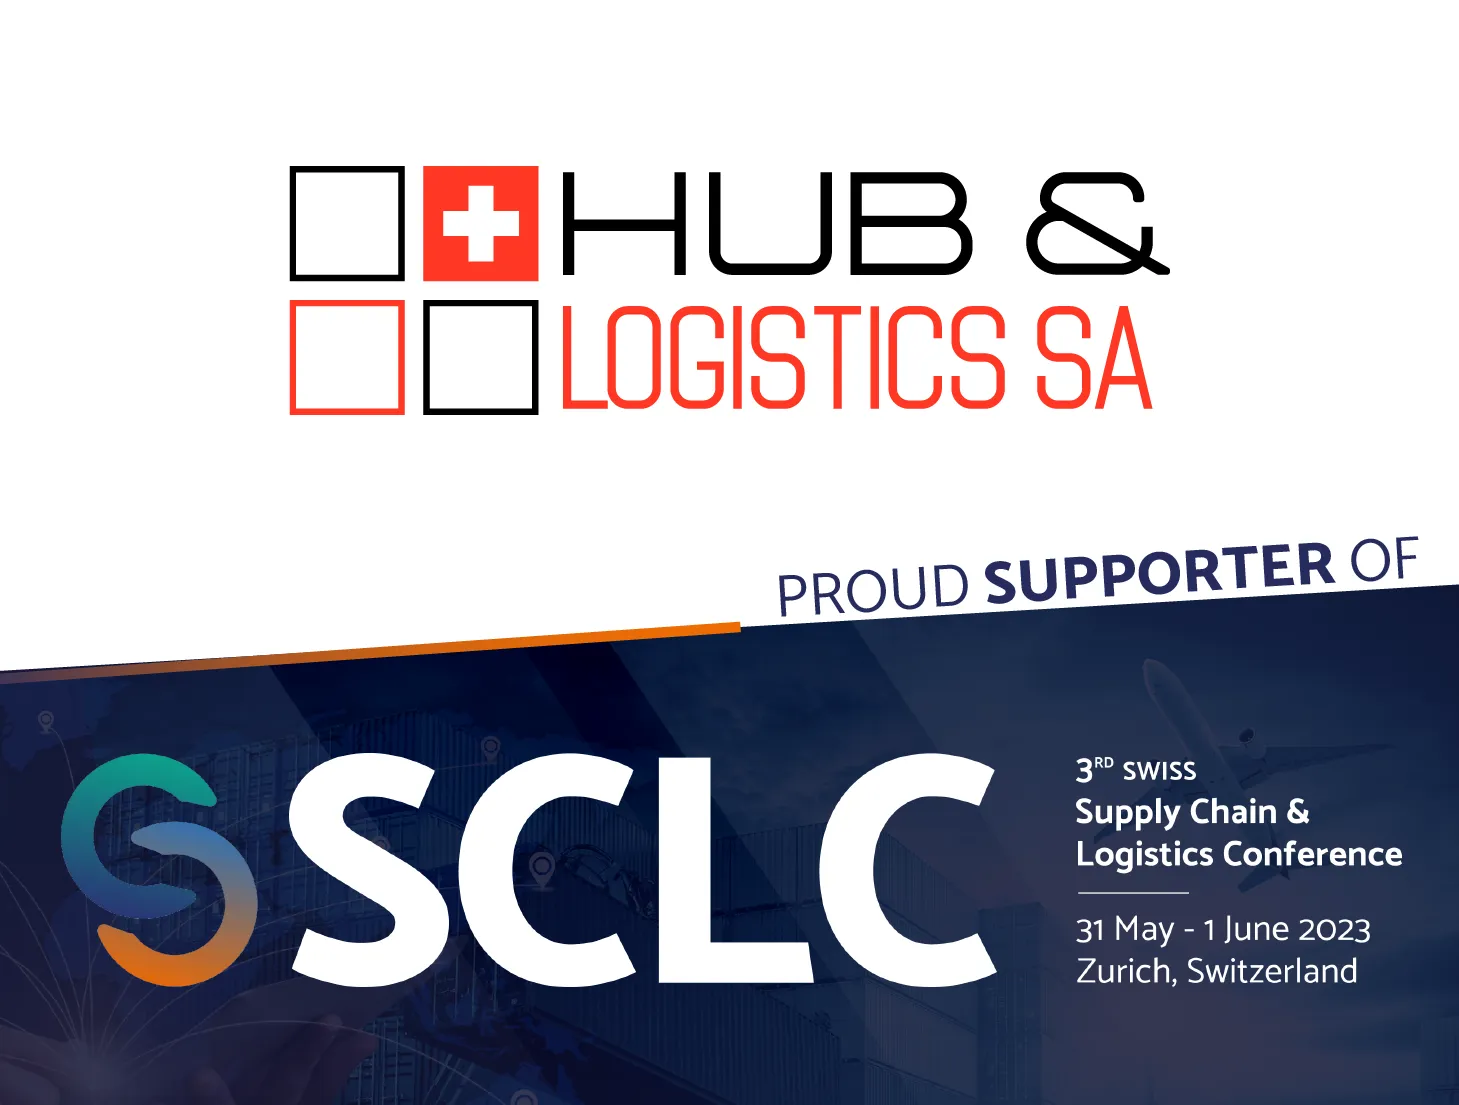 SCLS-Supply-Chain-Conference-2023-Logistics-SA-hublogistics-4pl-ticino